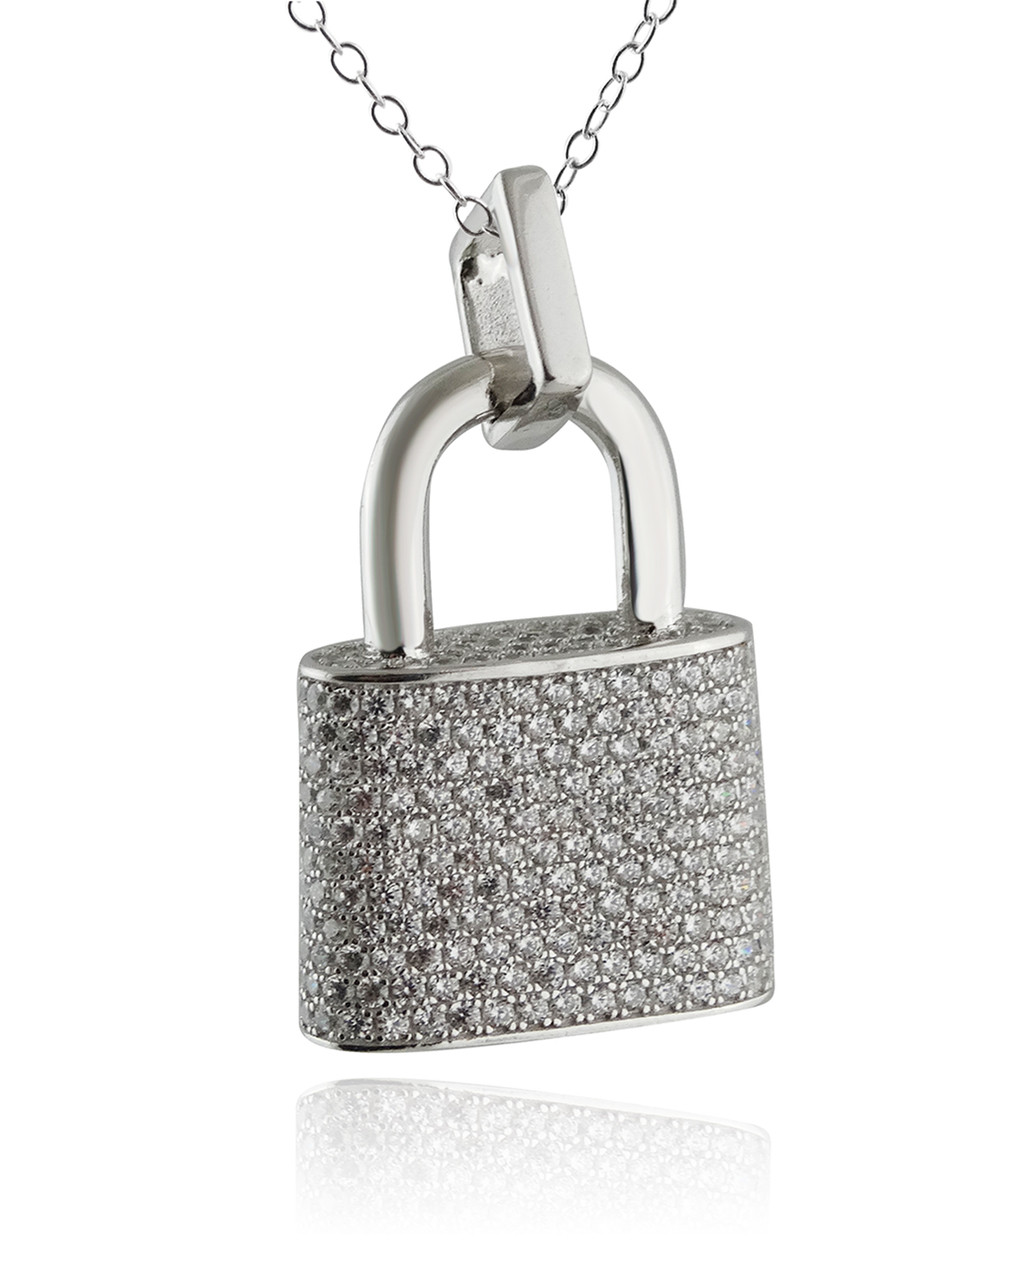 silver padlock necklace